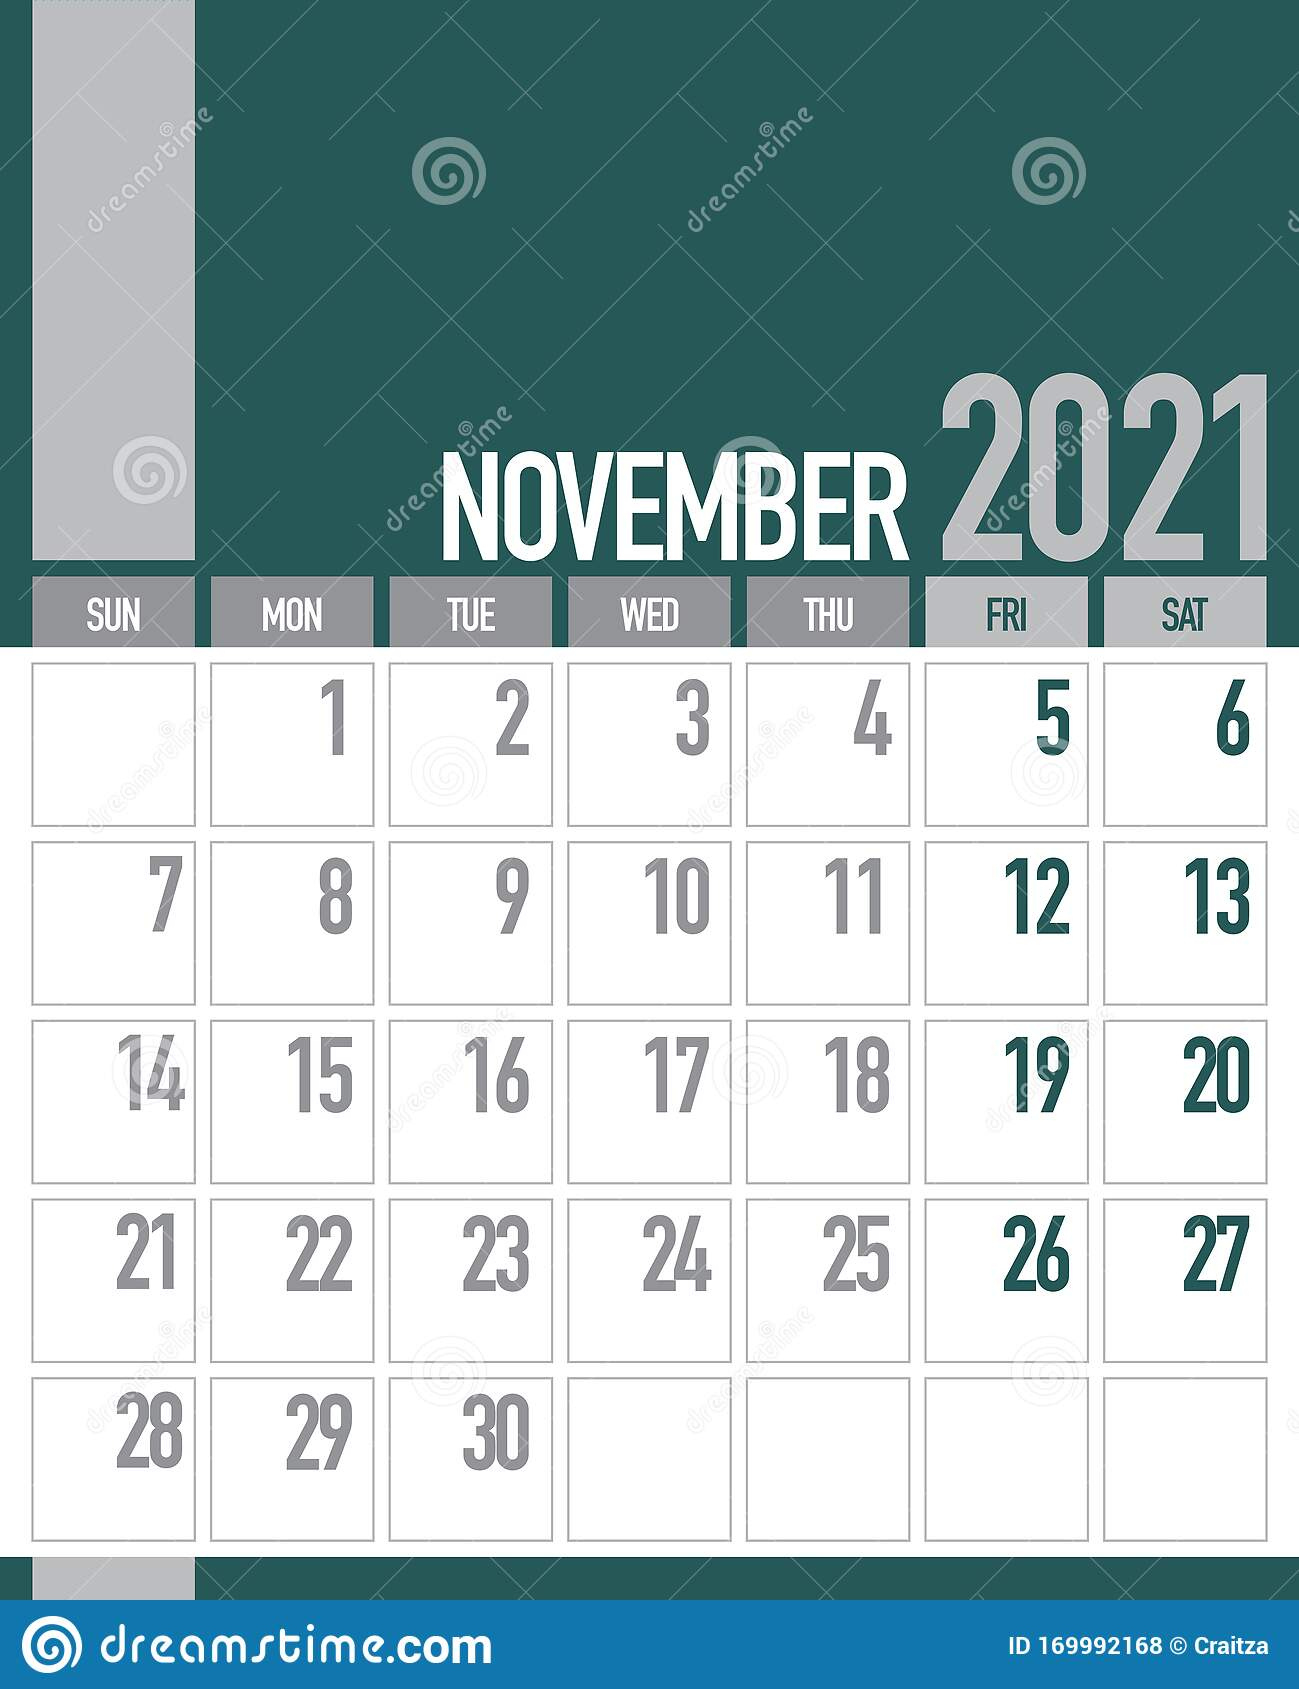 November 2021 Business Planner Calendar Stock Illustration November 2021 Calendar Xl